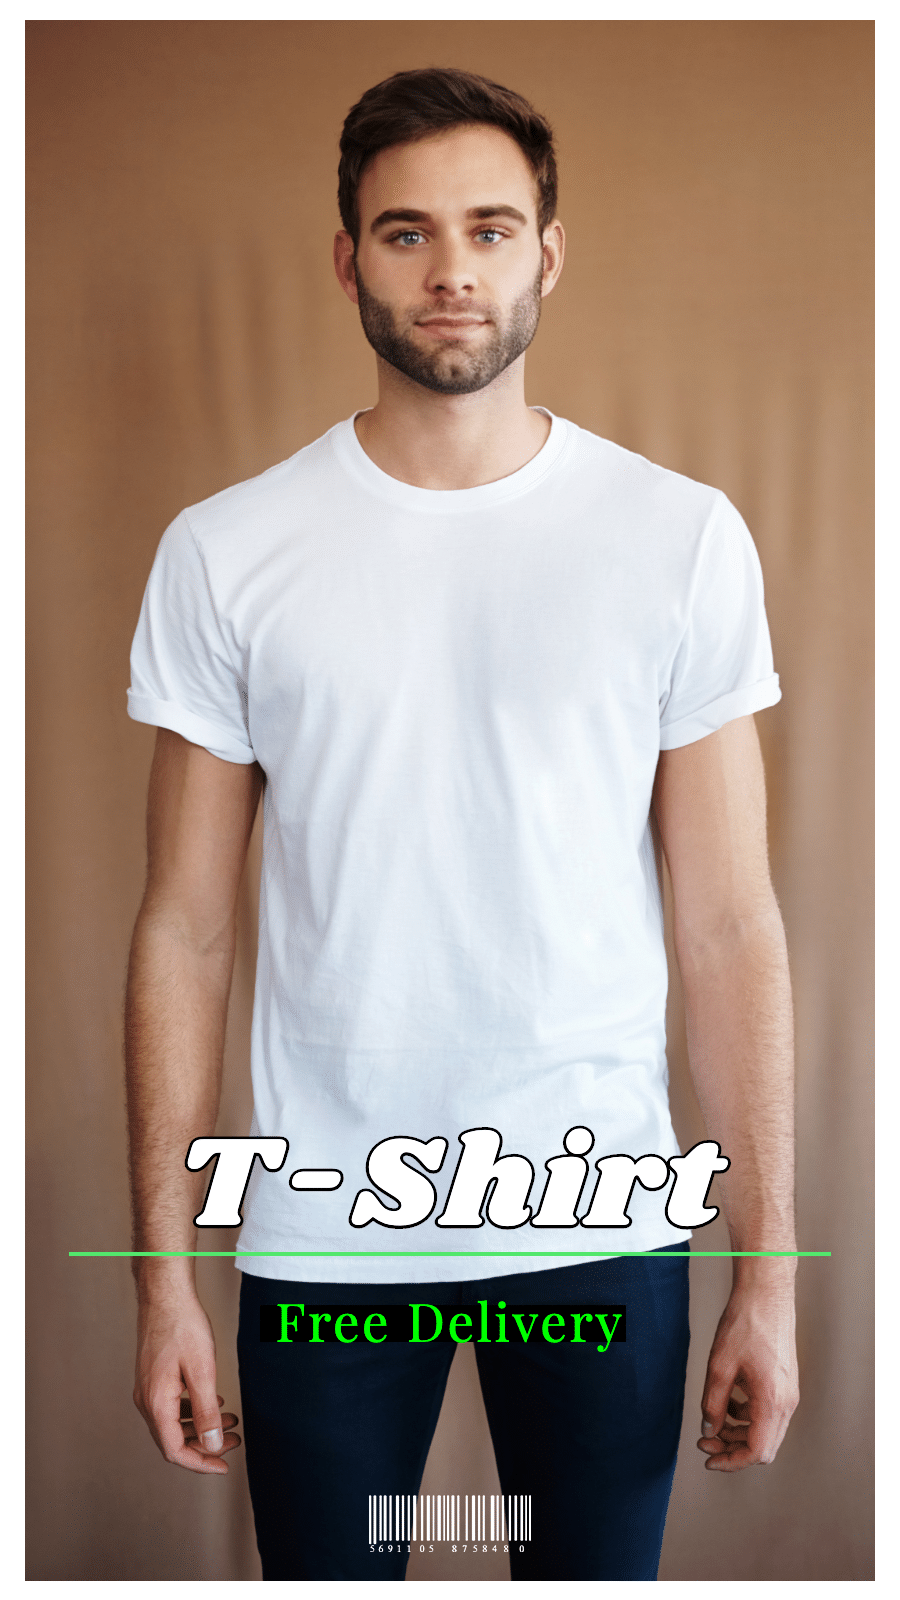 Simple Fashion Men's T-Shirt Display Instagram Story